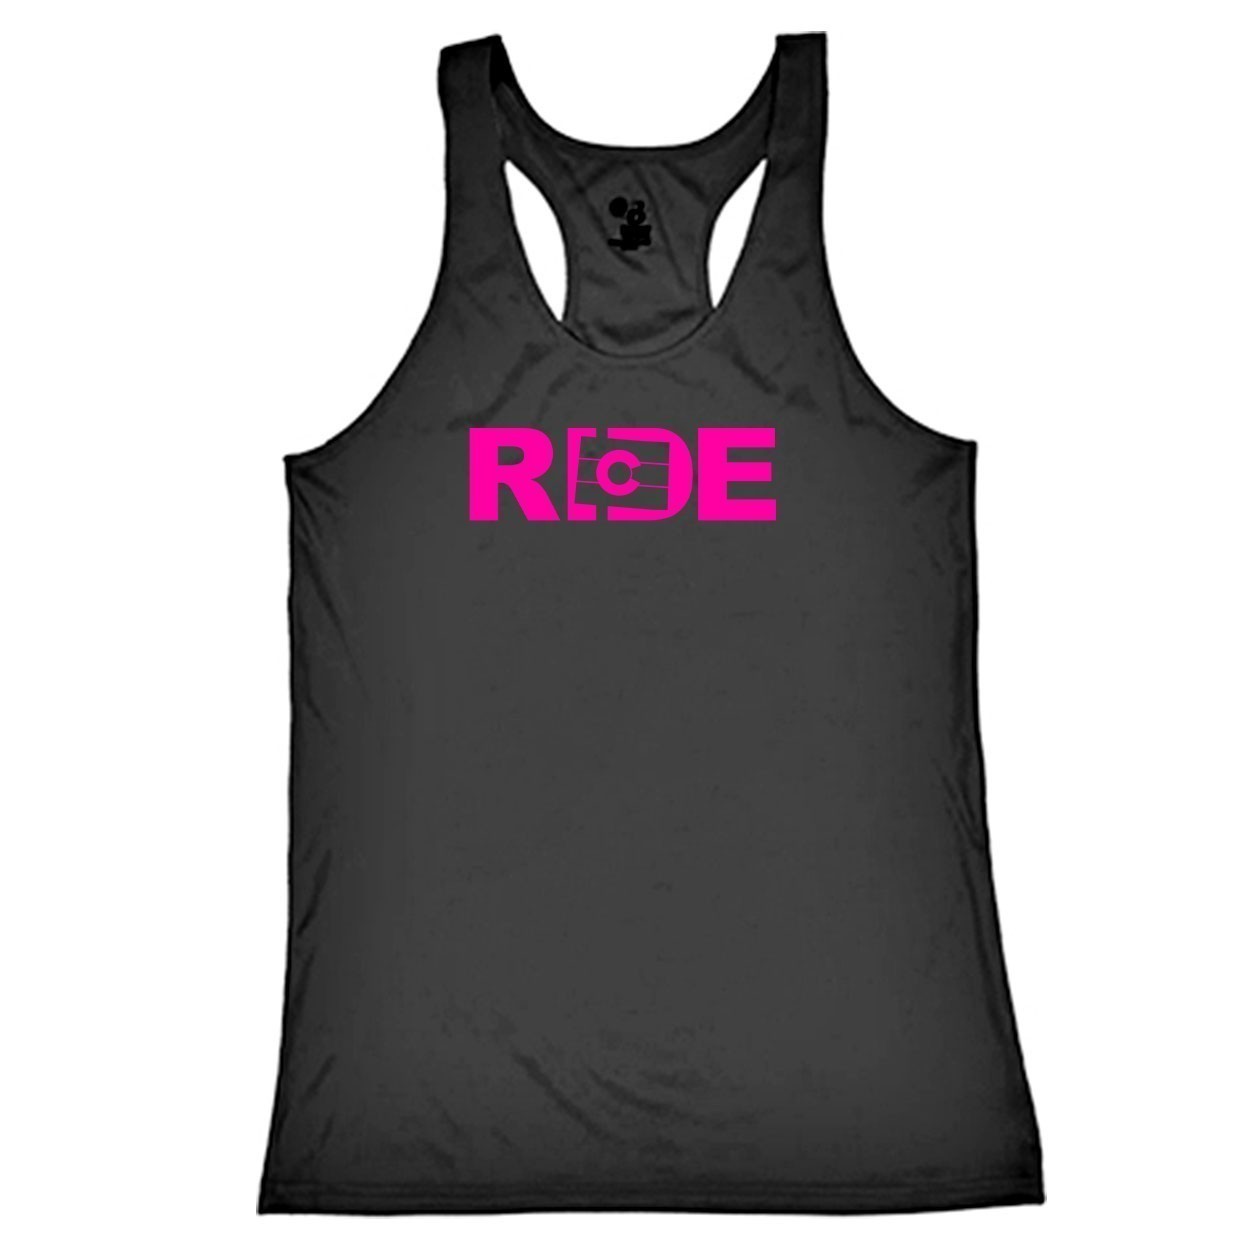 Ride Colorado Classic Youth Girls Performance Racerback Tank Top Black (Pink Logo)